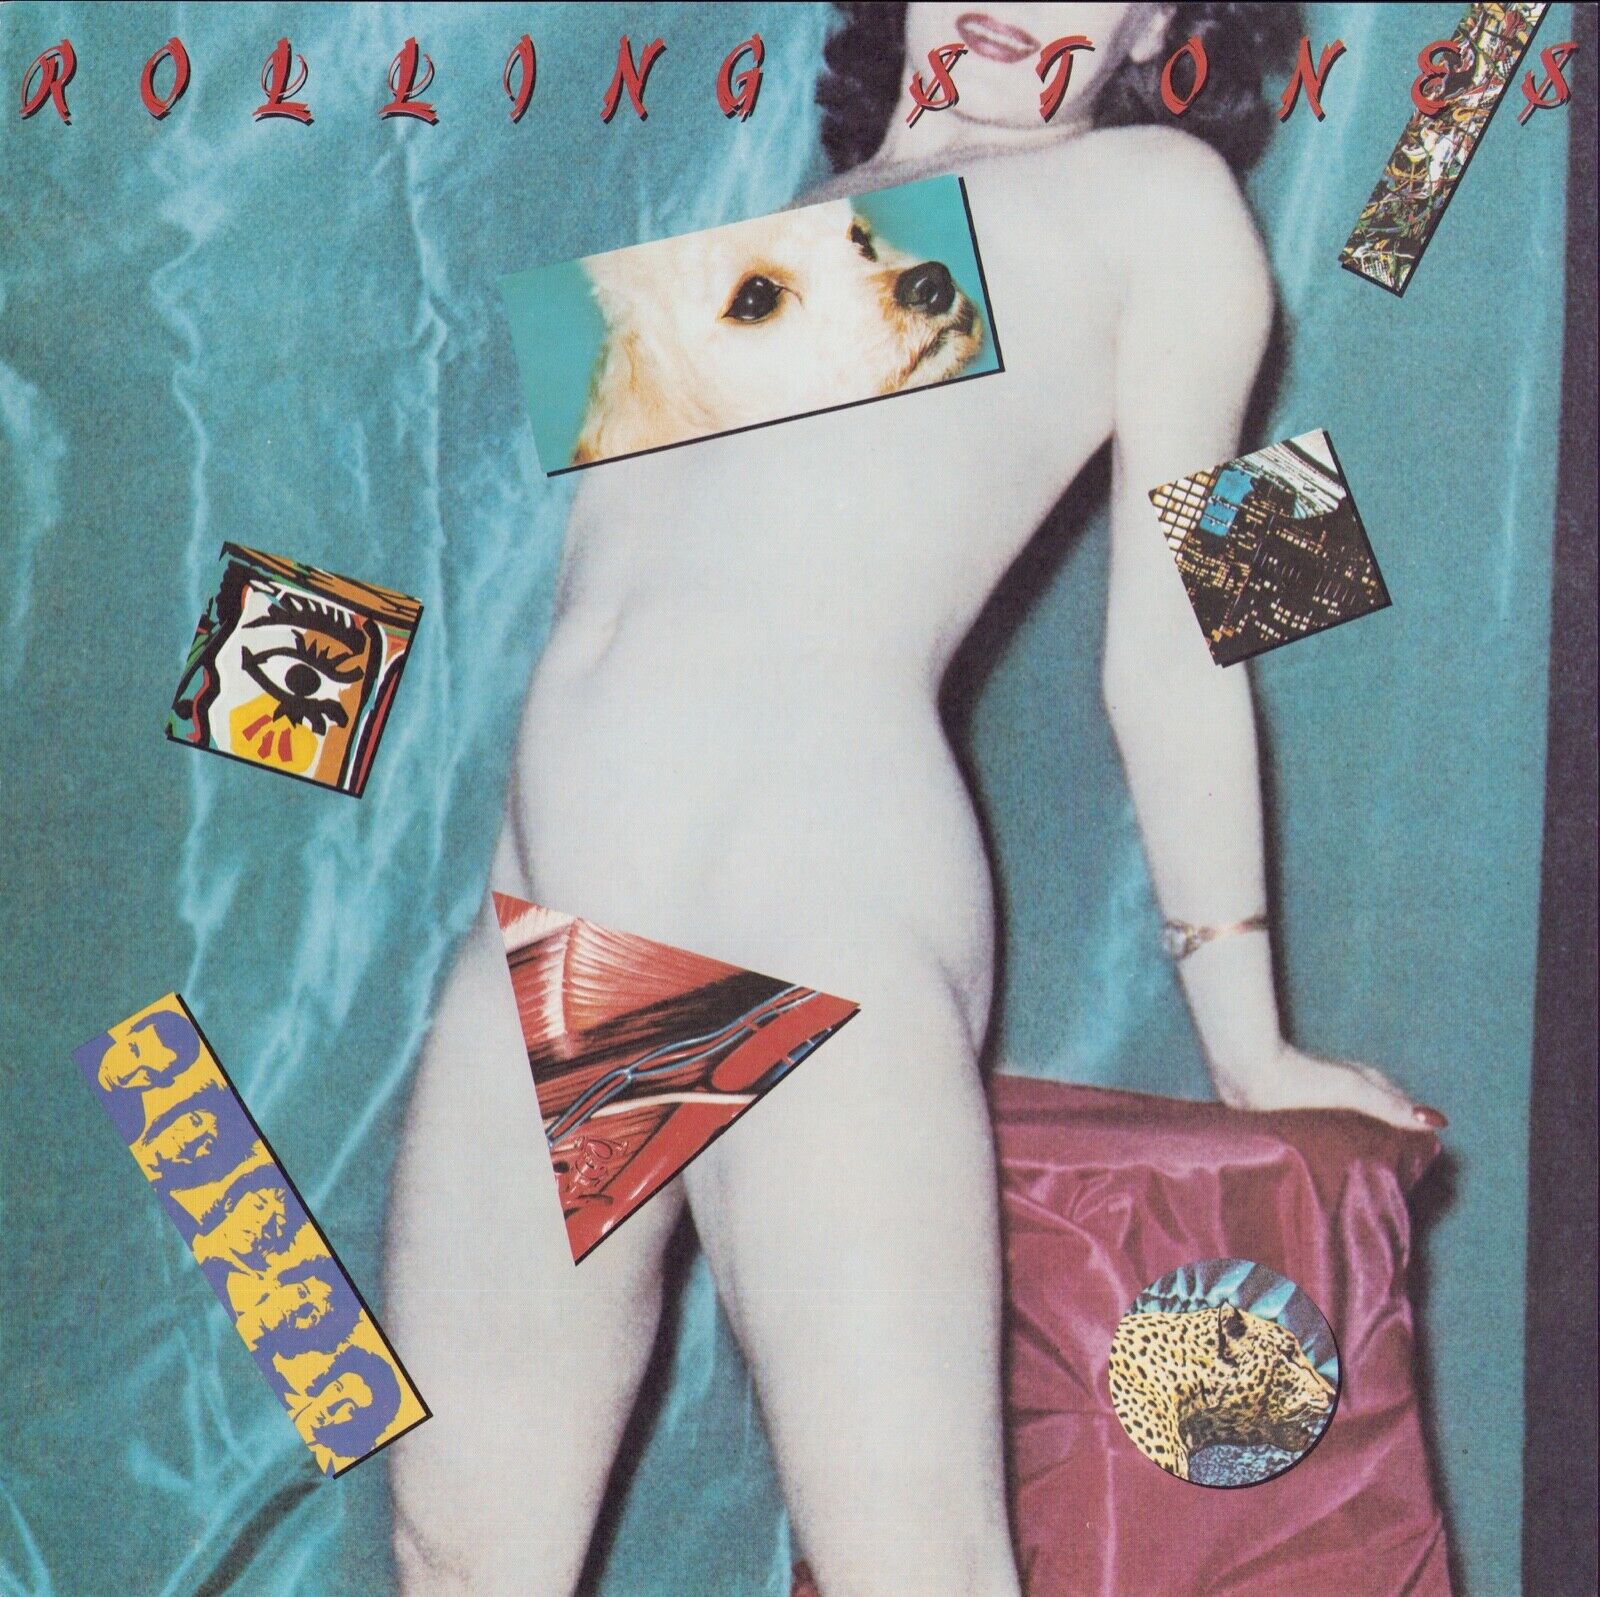 The Rolling Stones ‎- Undercover Vinyl LP